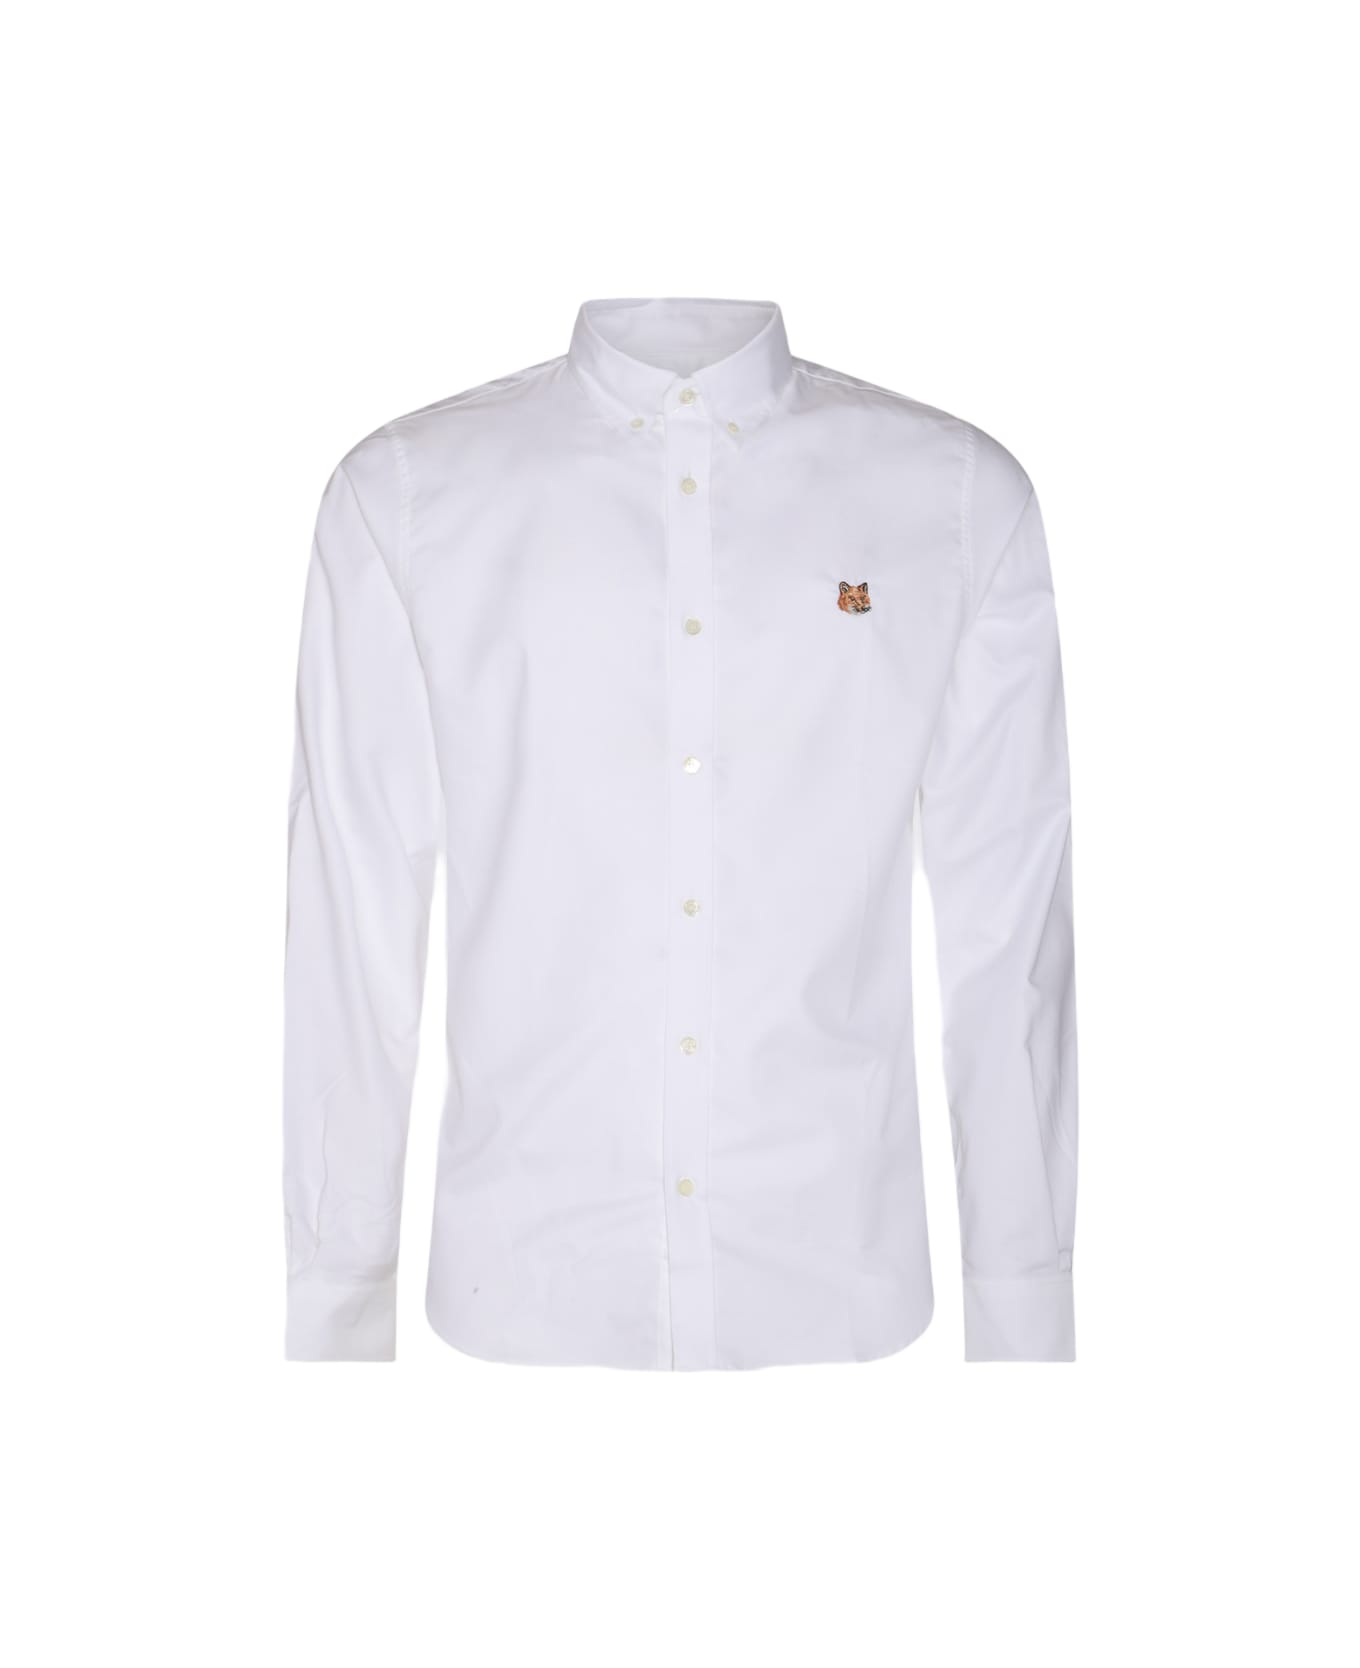 Maison Kitsuné White Cotton Shirt - White